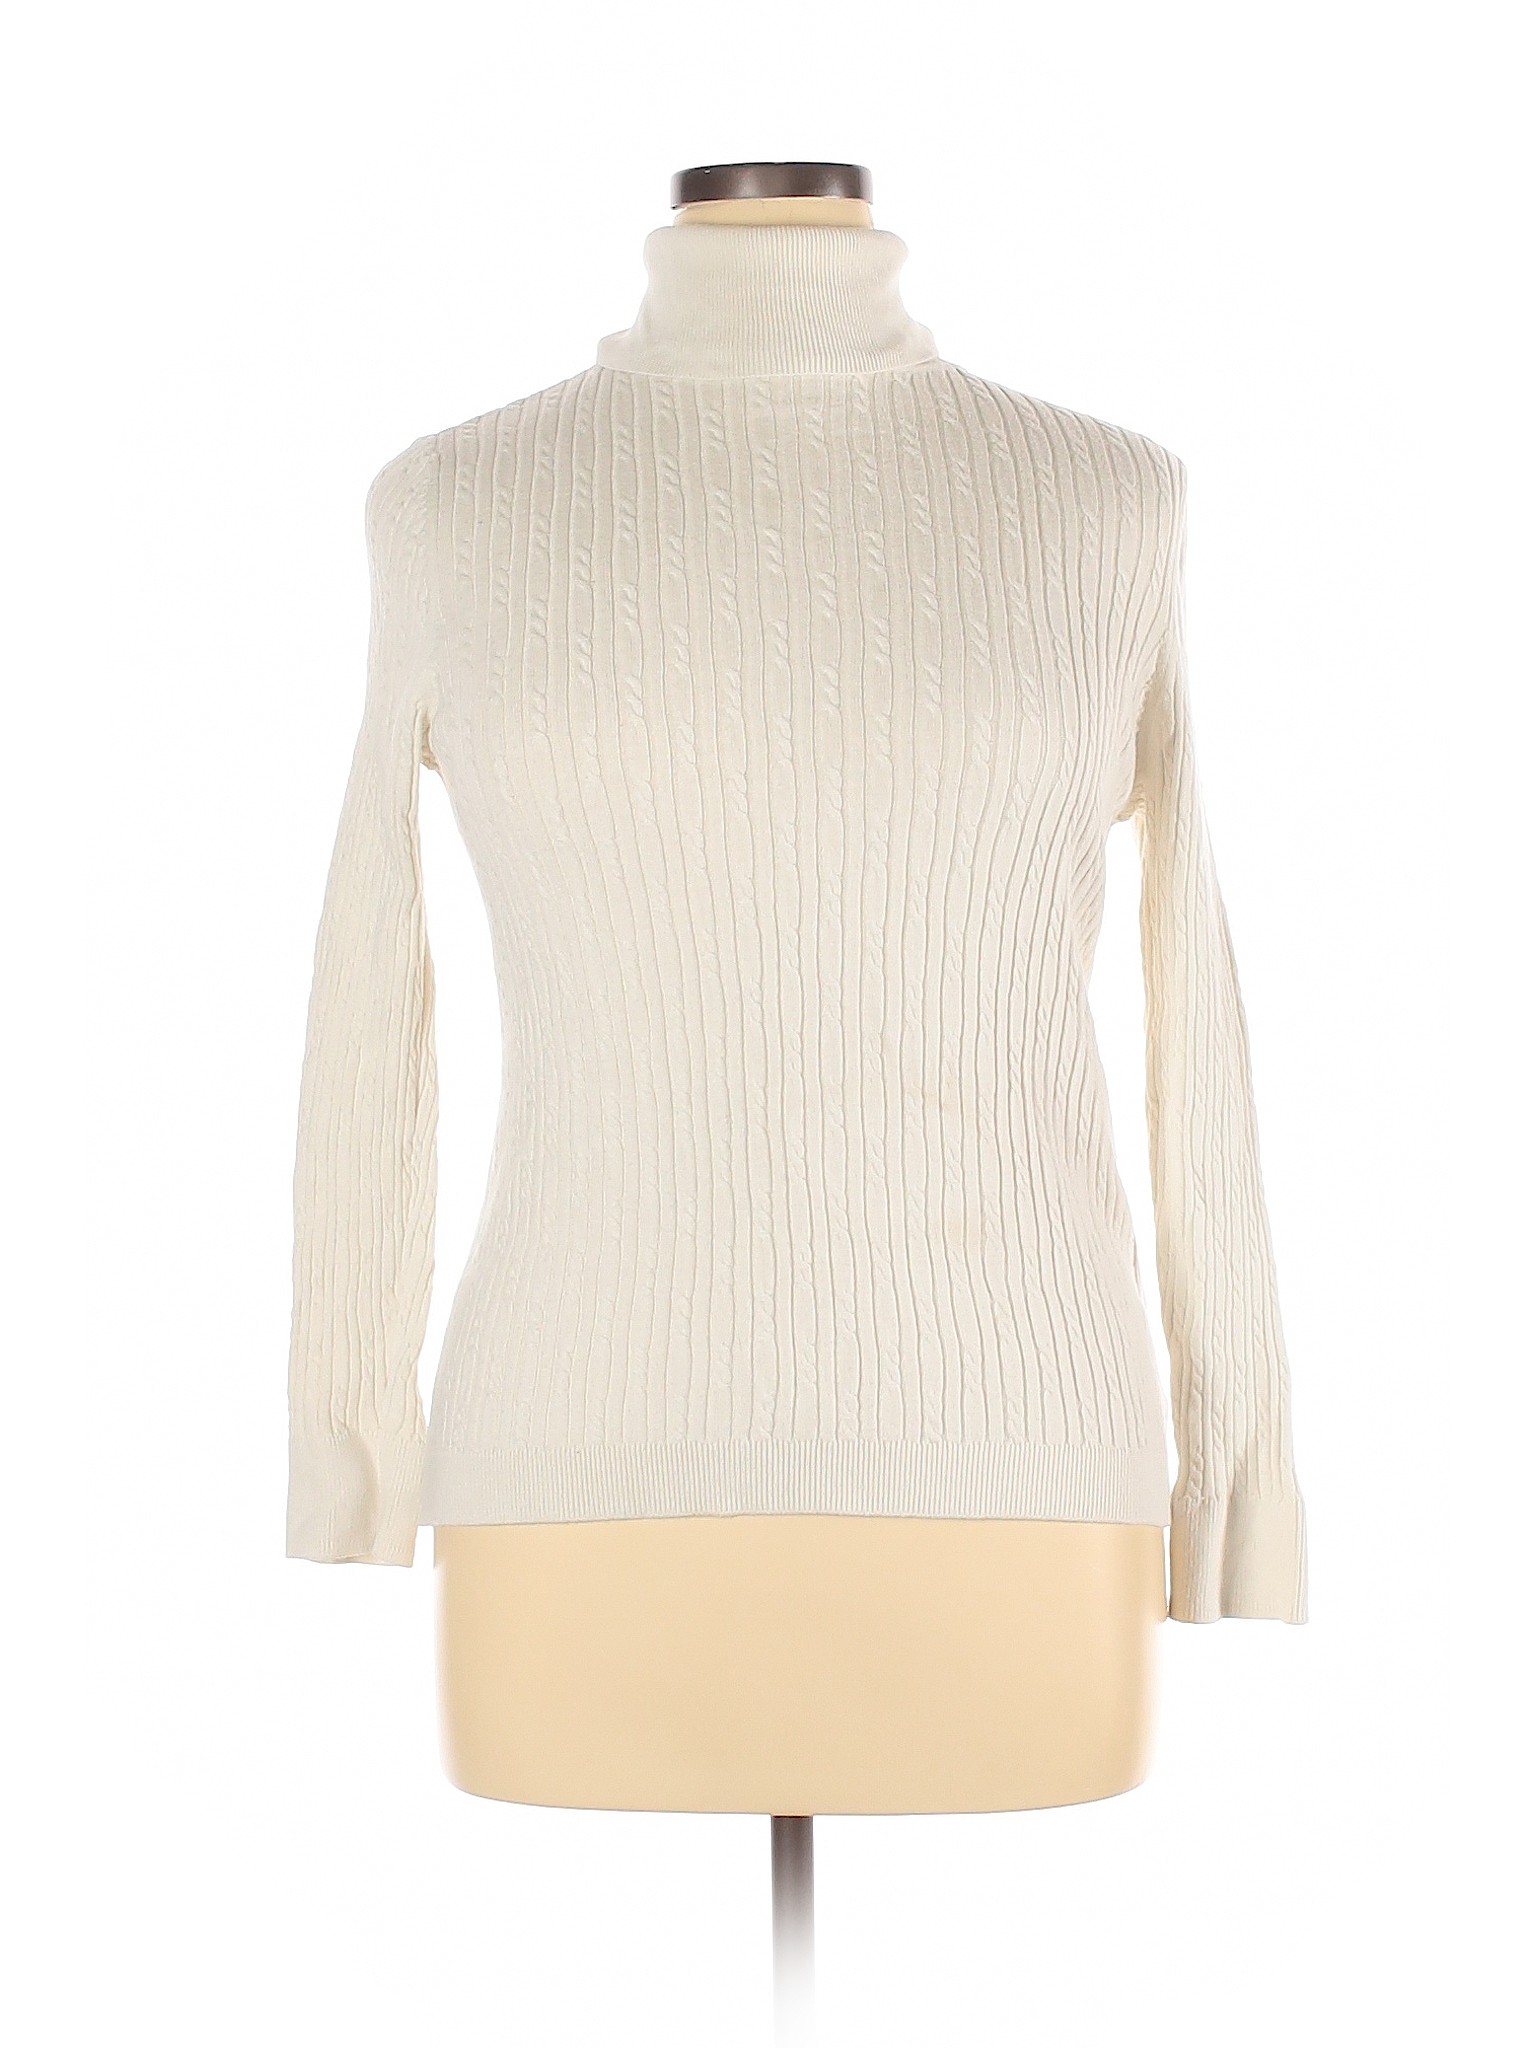 Talbots Women White Turtleneck Sweater XL | eBay